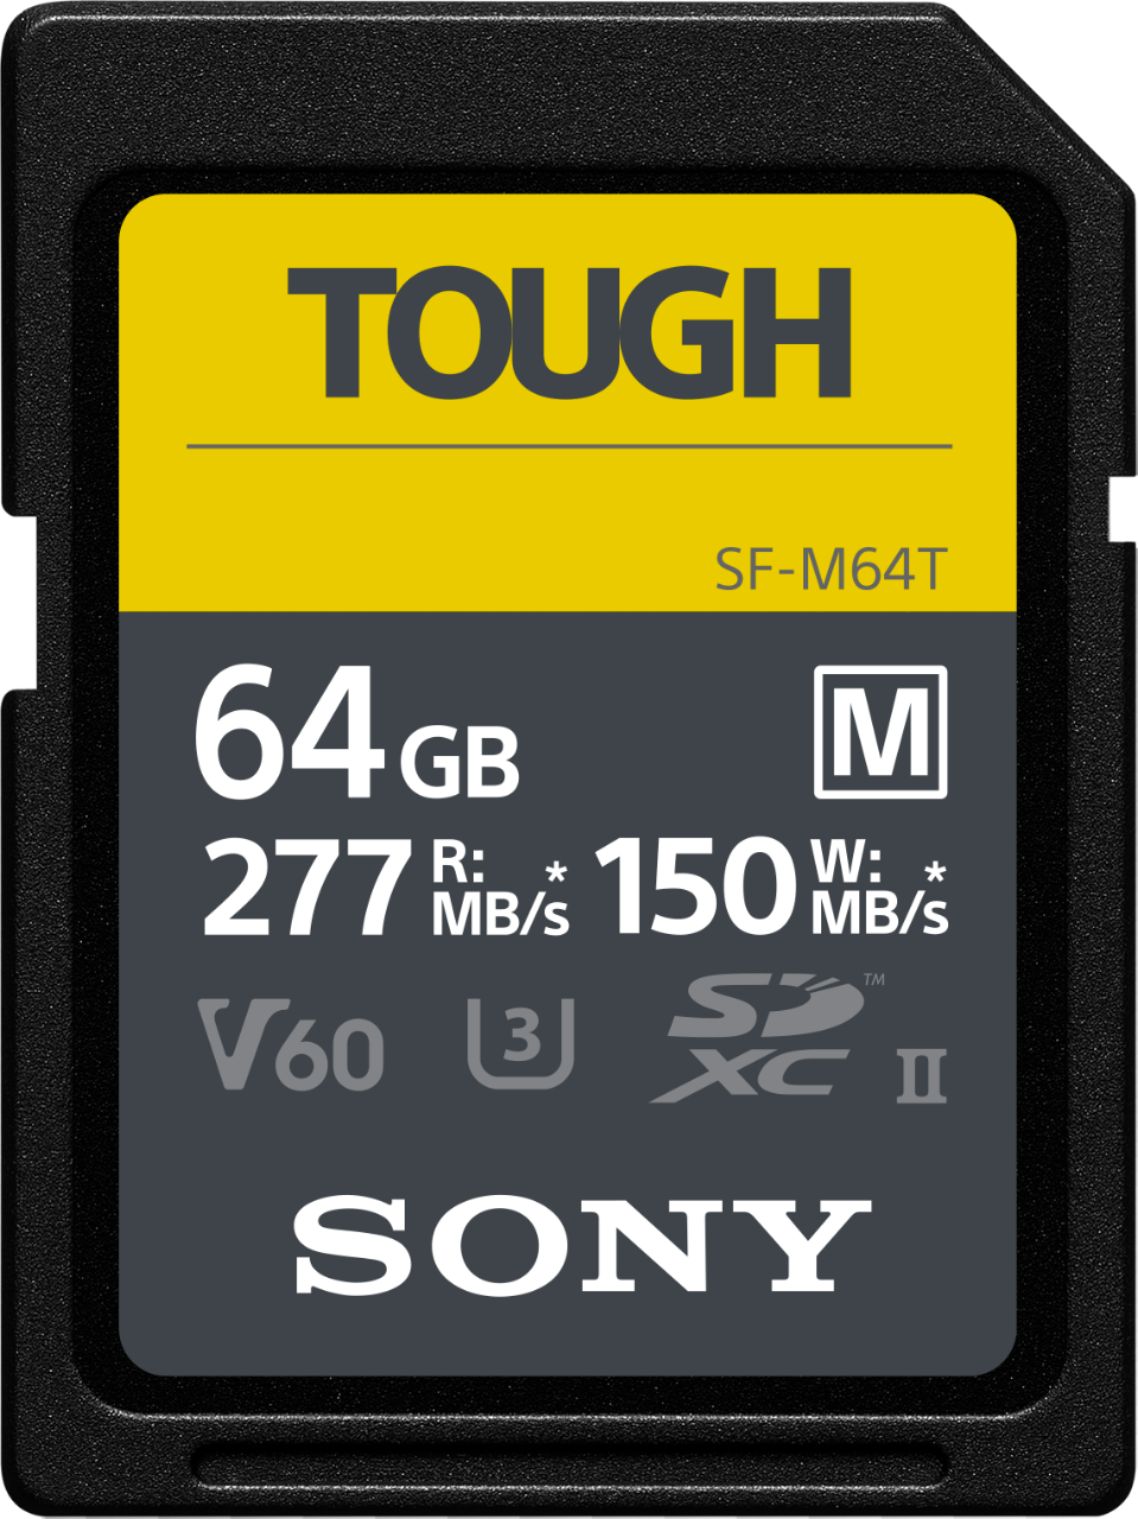 Sony TOUGH M Series 64GB SDXC UHS-II Memory Card  - Best Buy